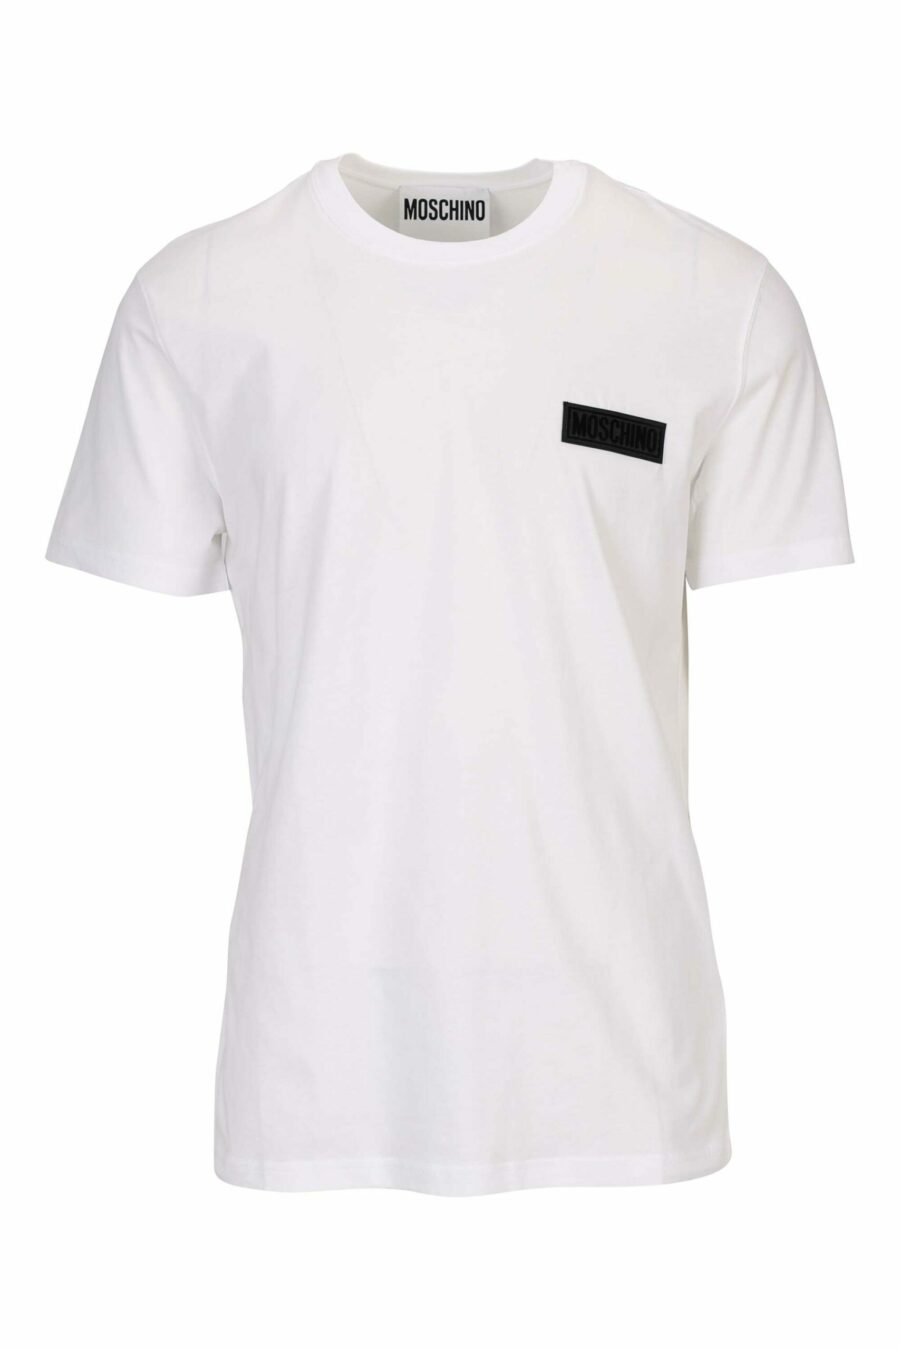 White T-shirt with black mini-logo label - 667113394664 scaled